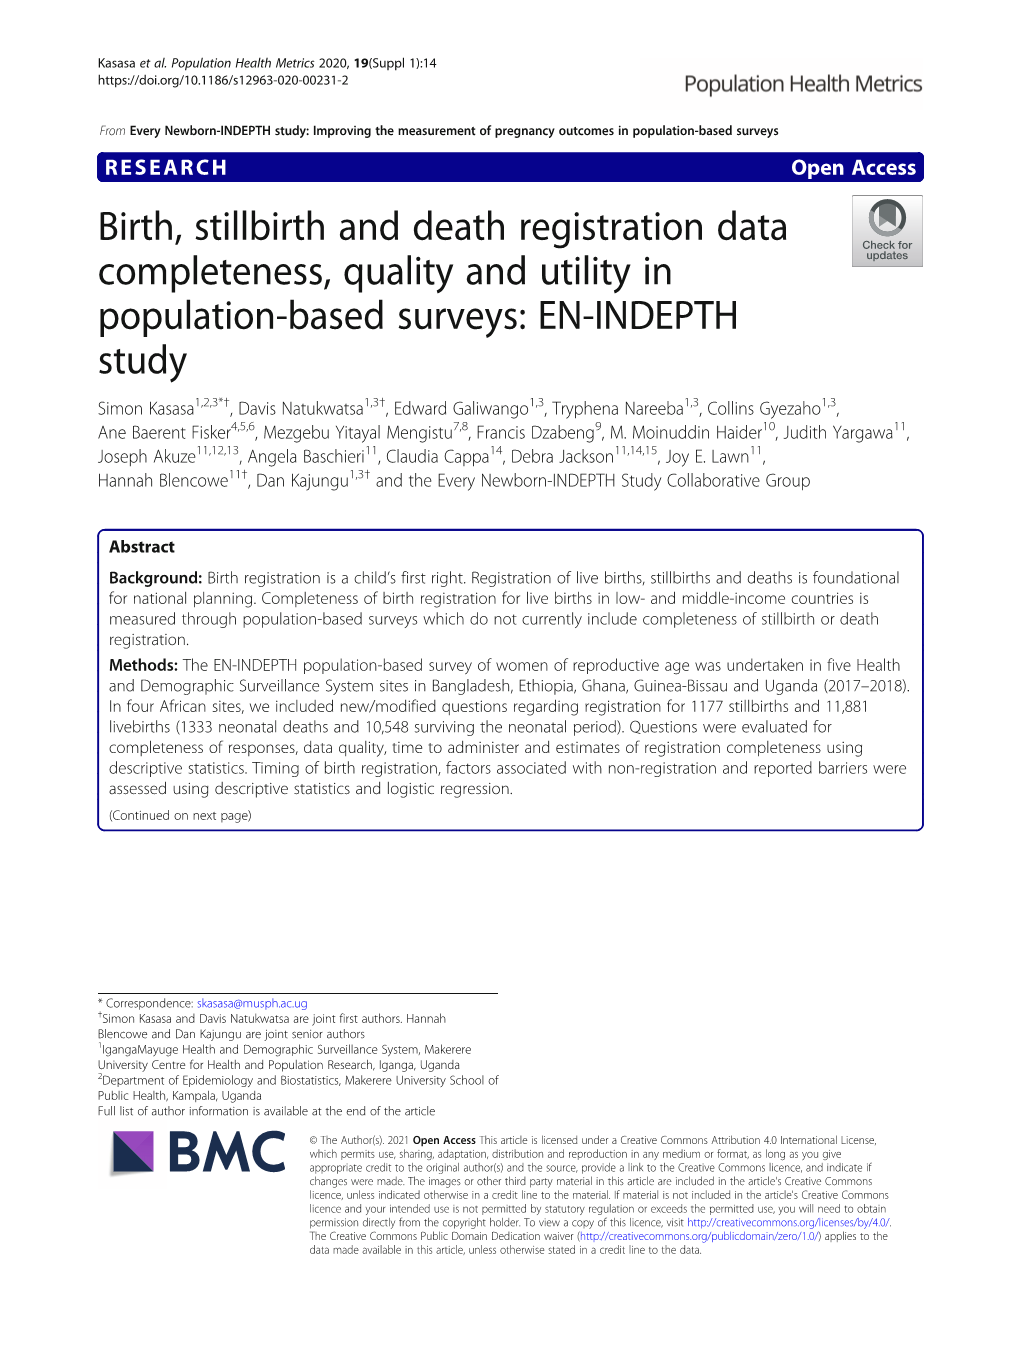 Birth, Stillbirth and Death Registration Data Completeness, Quality And